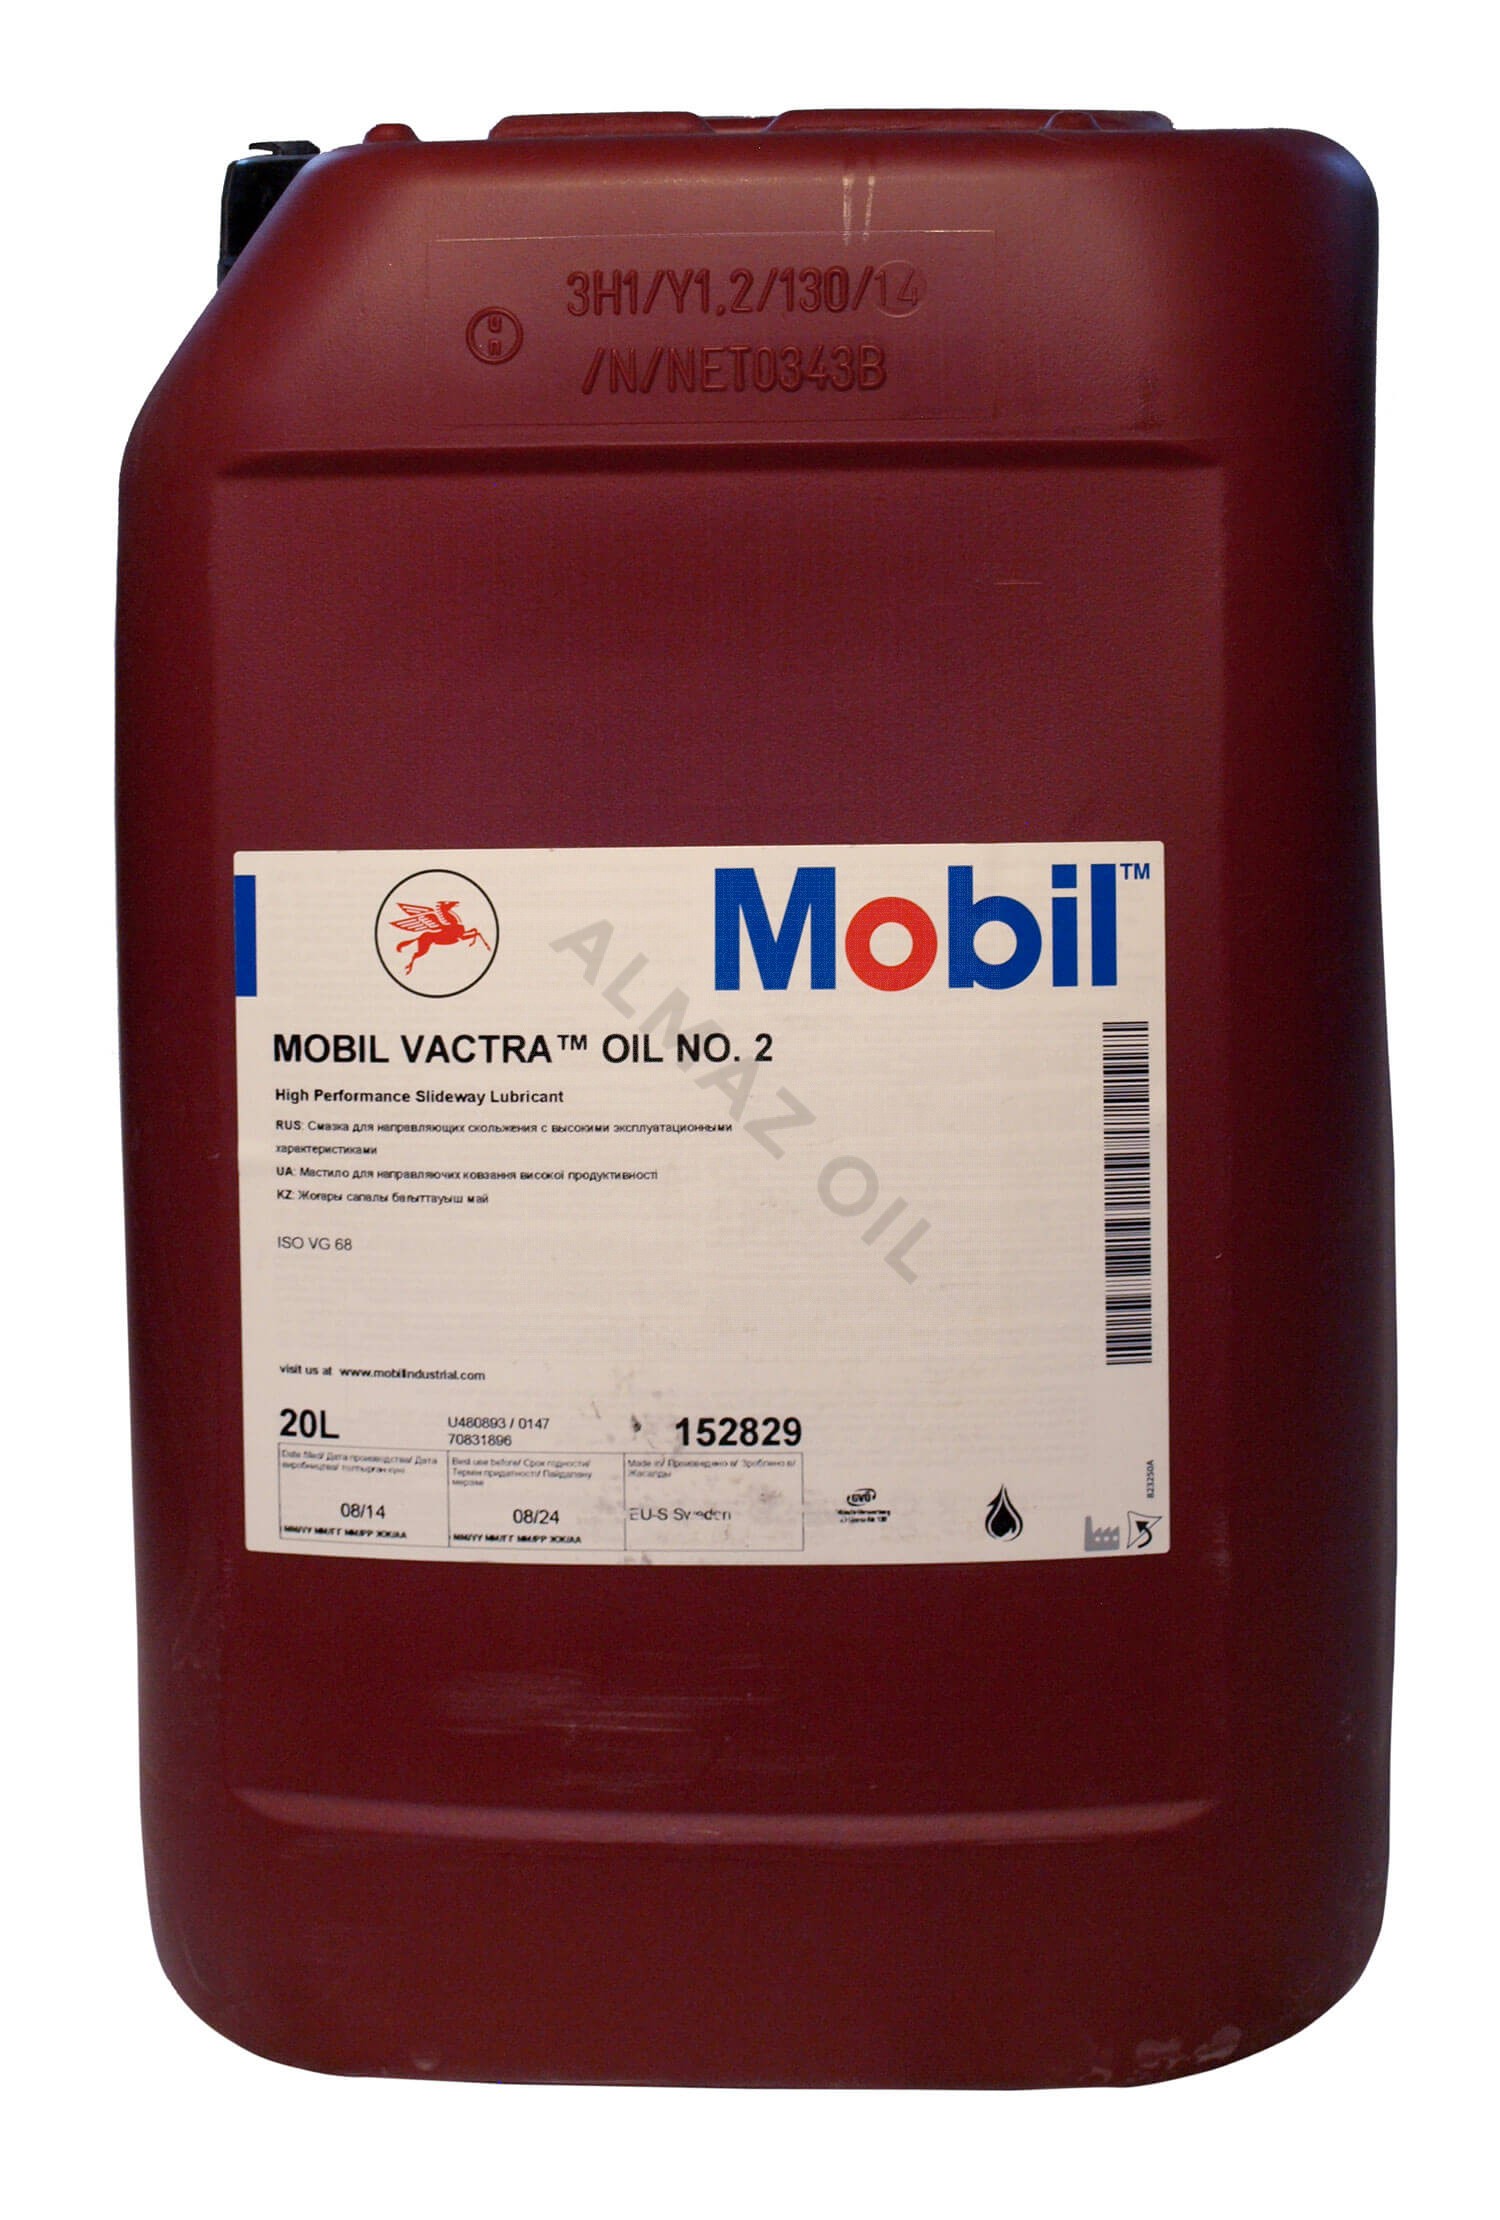 Mobil Vactra Oil No. 2